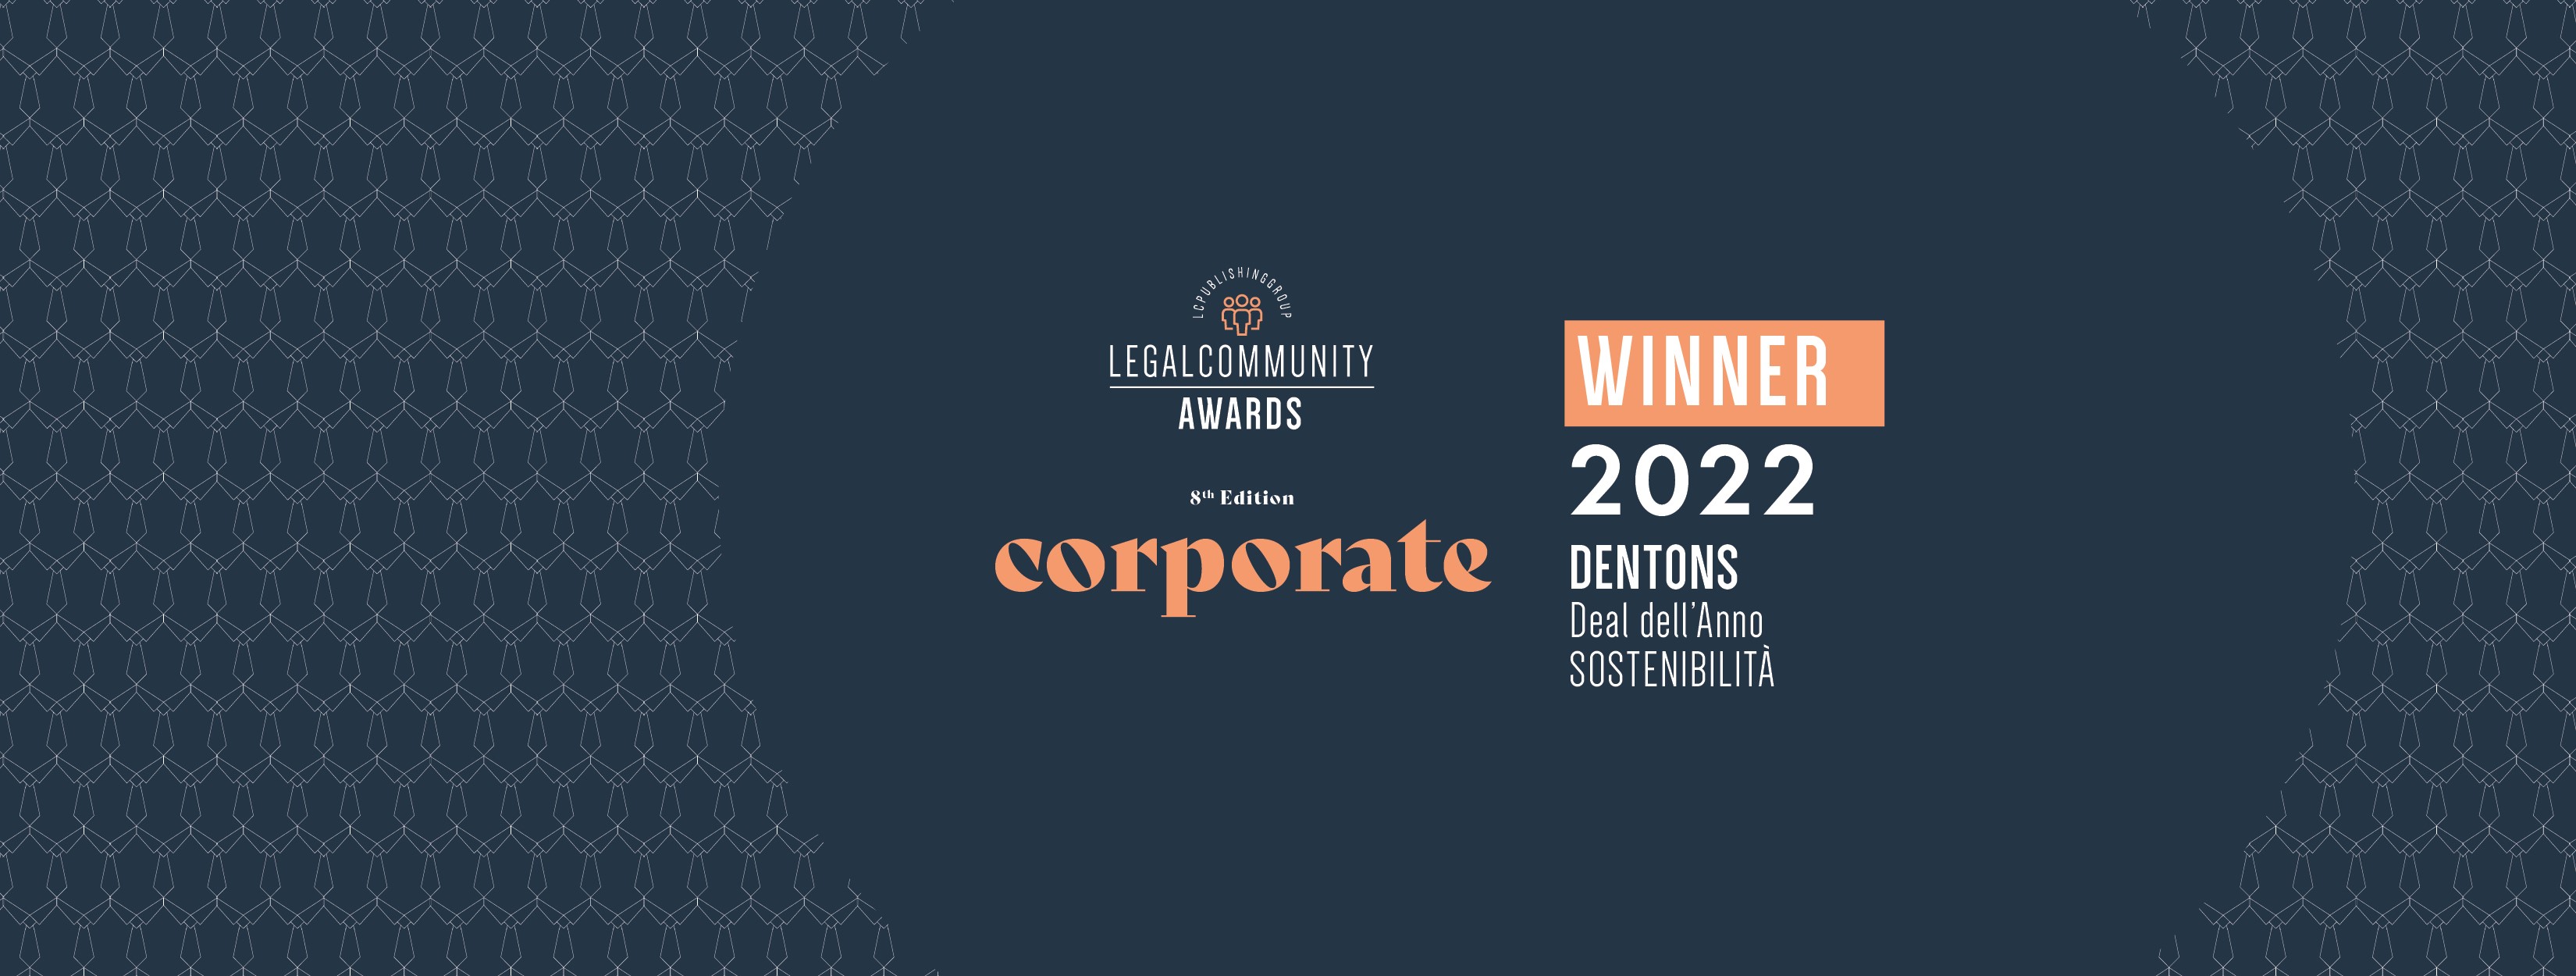 Legal Community Awards 2022 banner